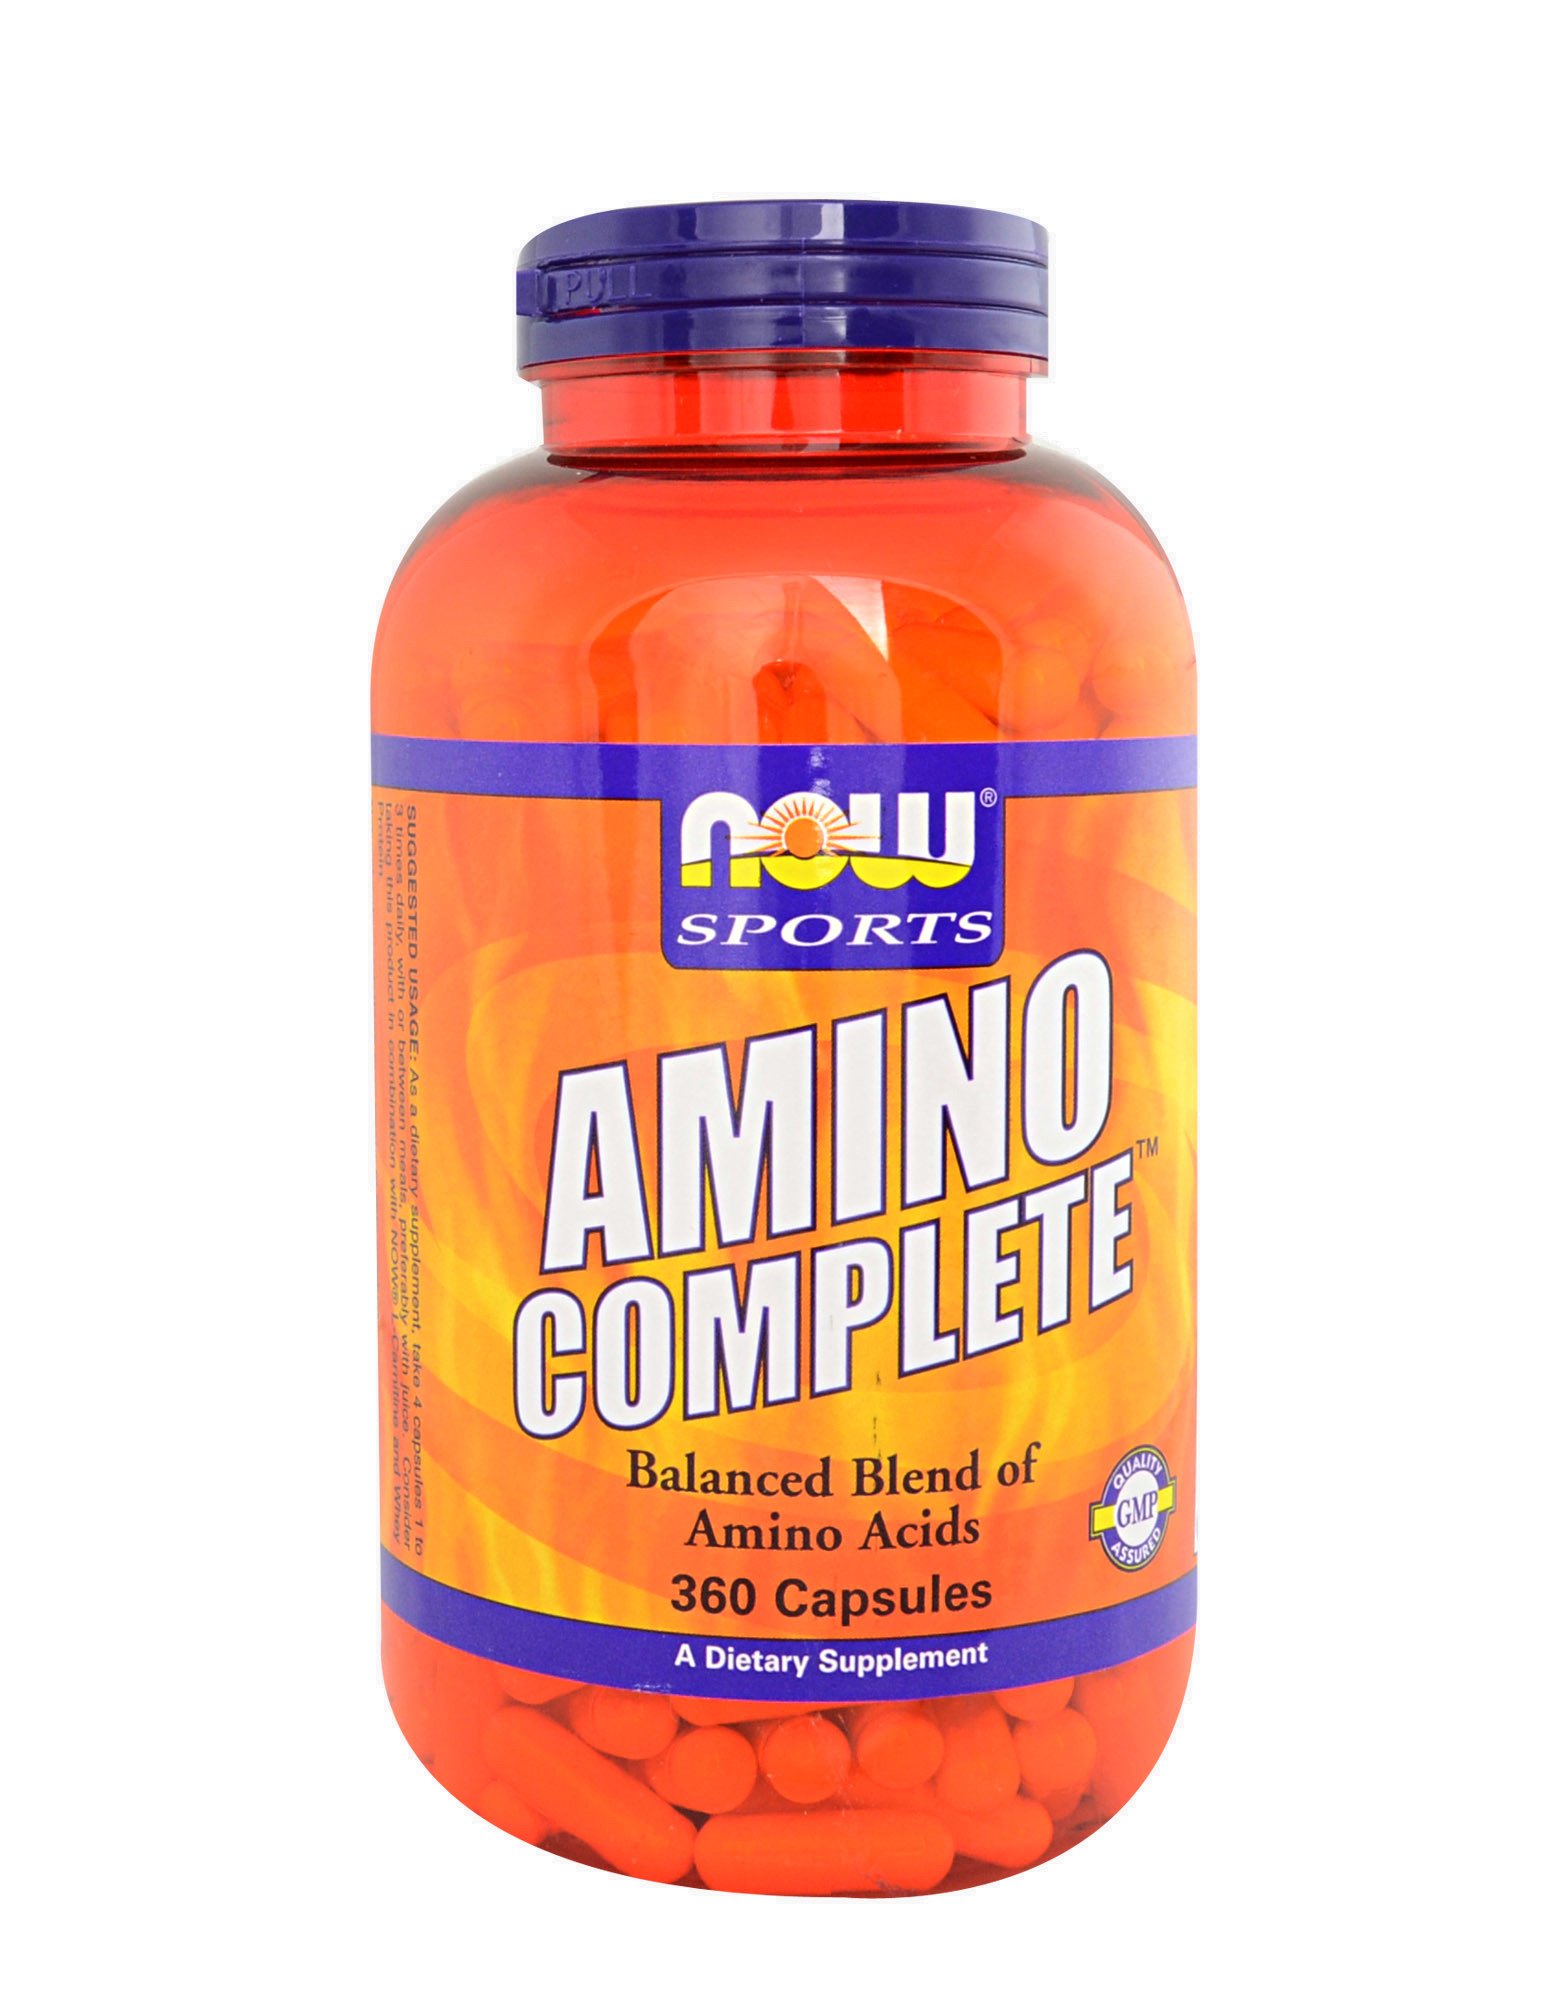 Complete amino acid